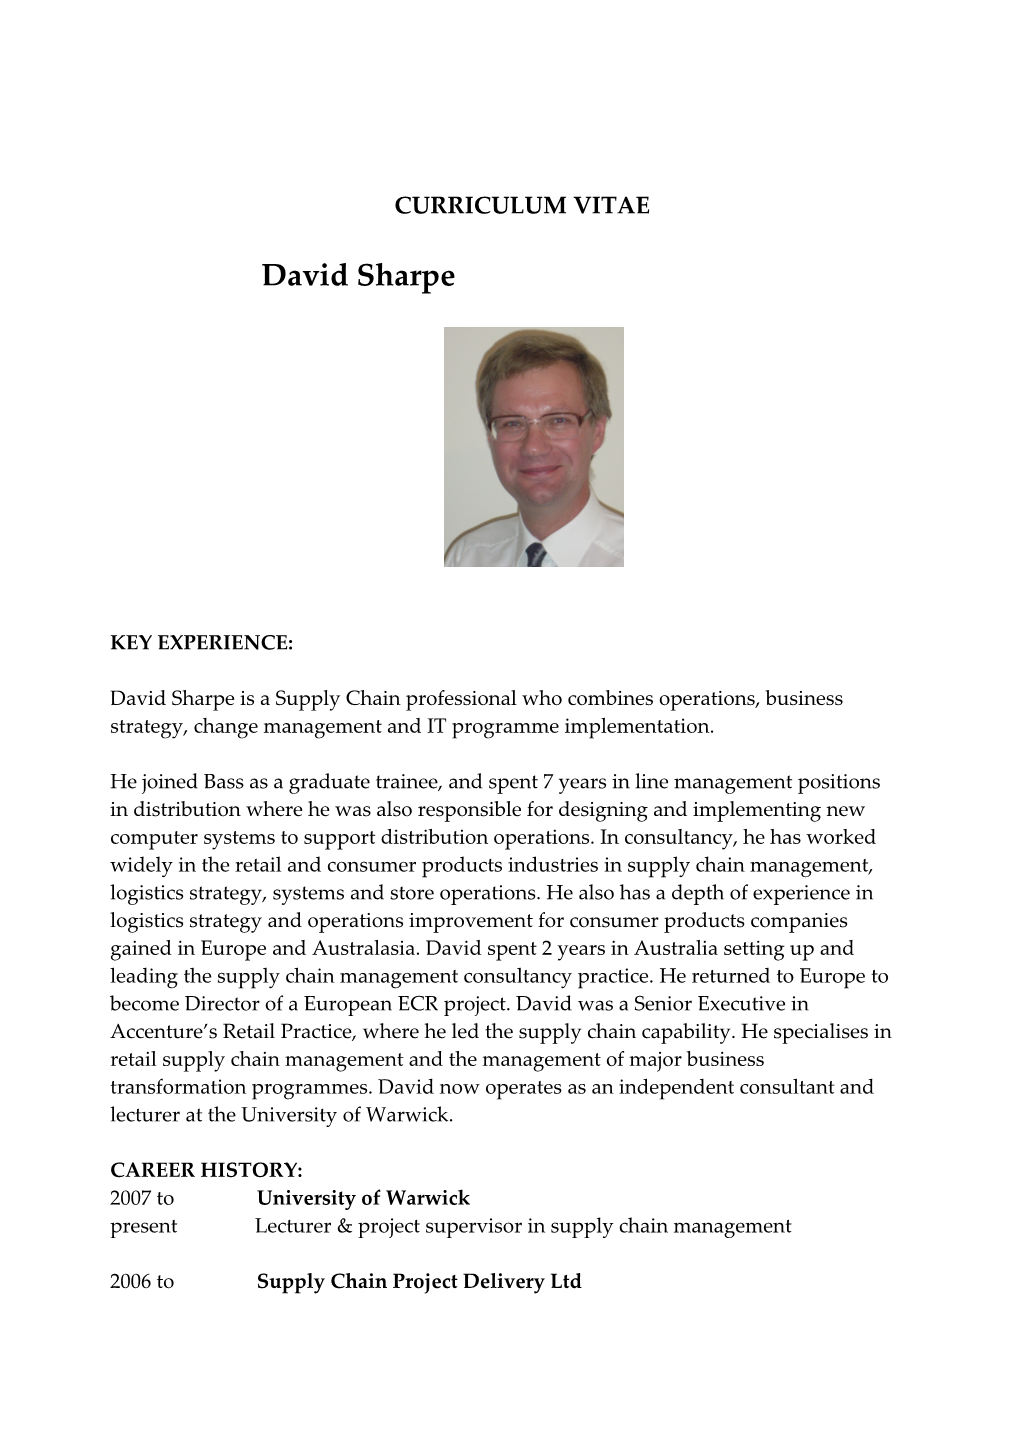 Curriculum Vitae: David Sharpe